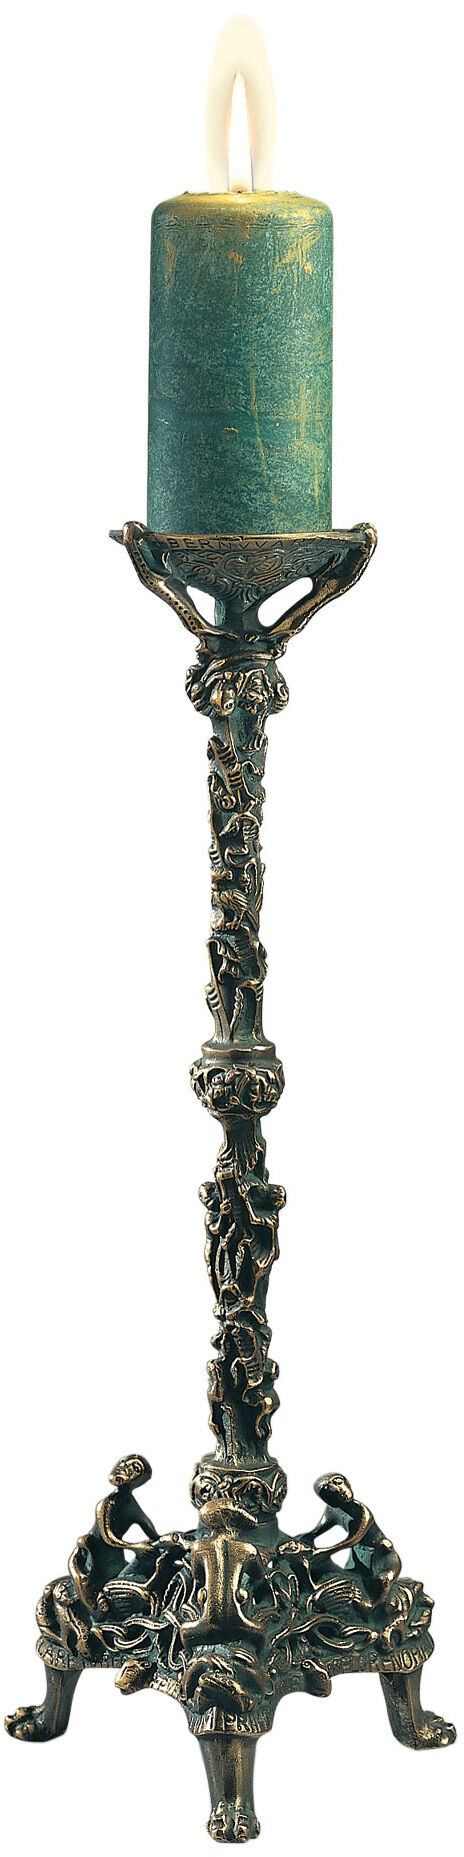 St. Bernward candlestick (reduction), bronzed version